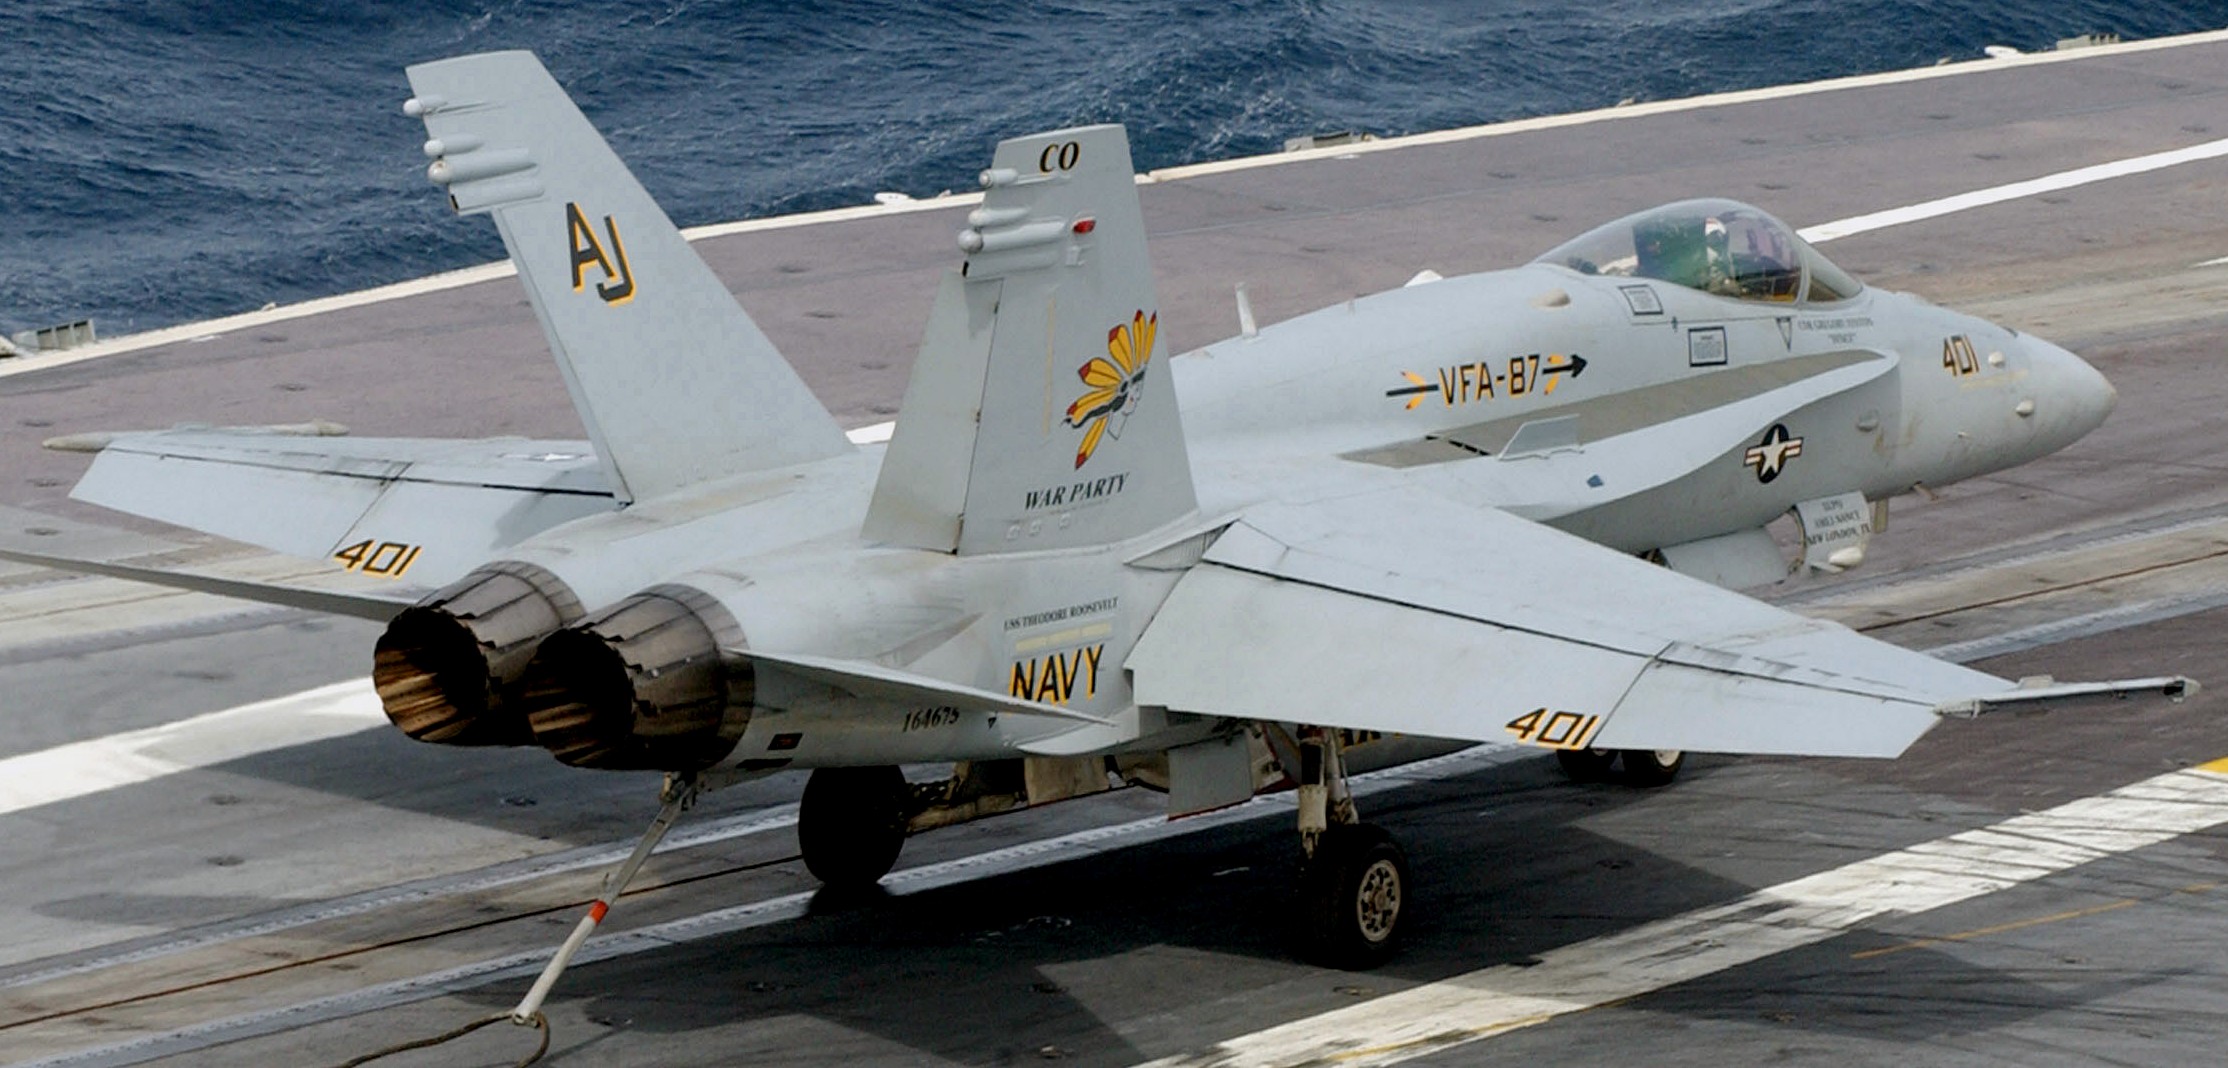 vfa-87 golden warriors strike fighter squadron f/a-18c hornet cvw-8 uss harry s. truman cvn-75 us navy 09